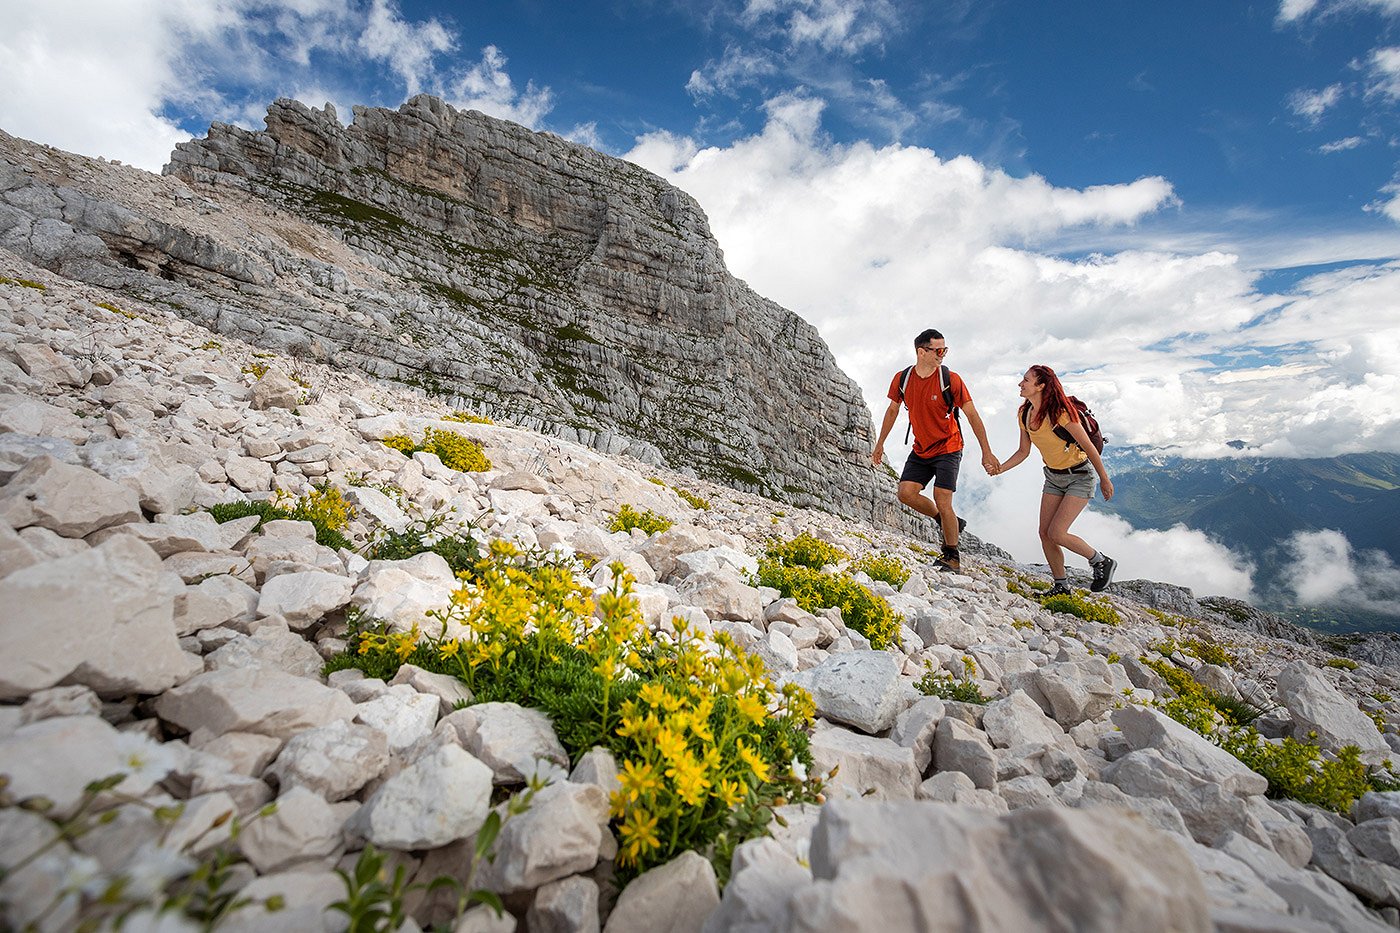 Par uživa na sprehodu ob gorskem cvetju na Kaninu 